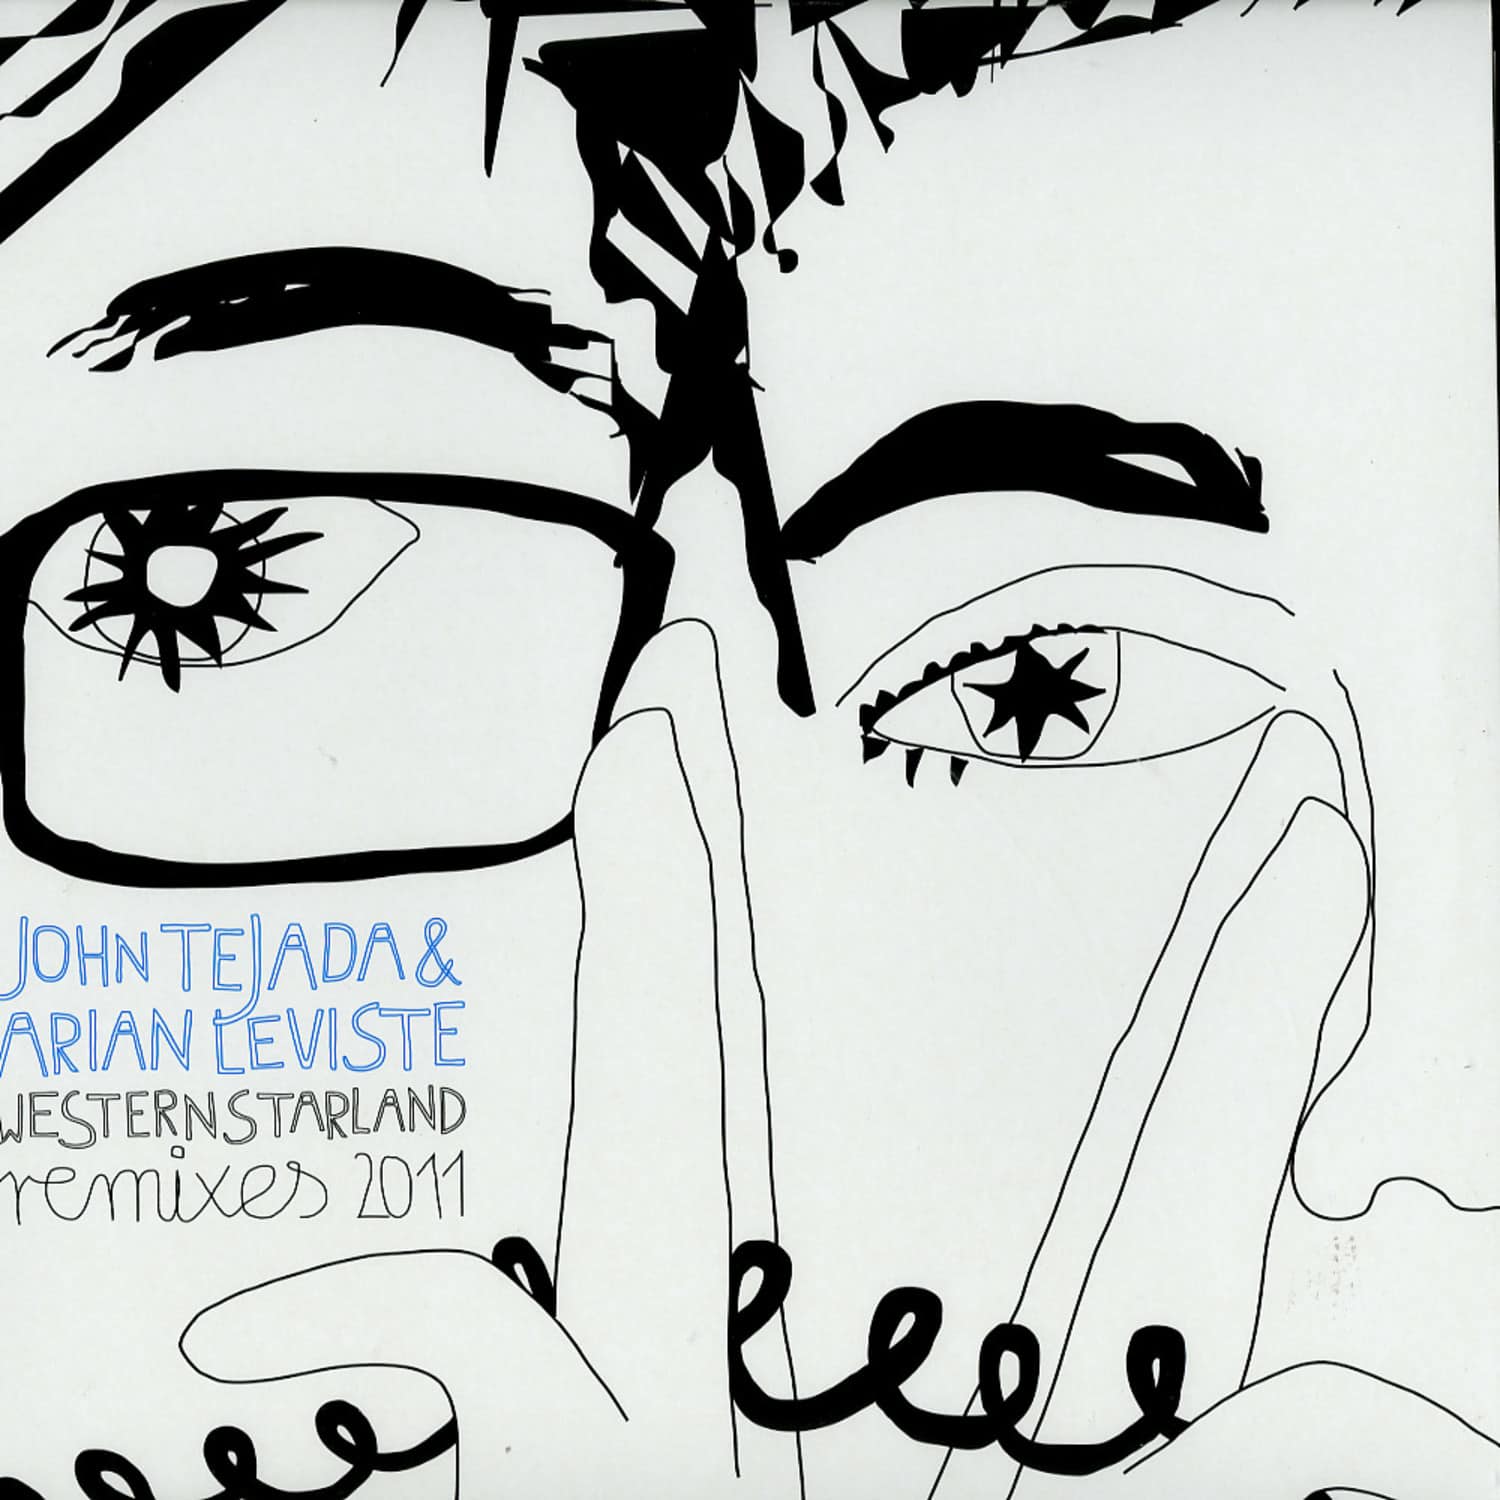 John Tejada & Arian Leviste - WESTERN STARLAND REMIXES 2011